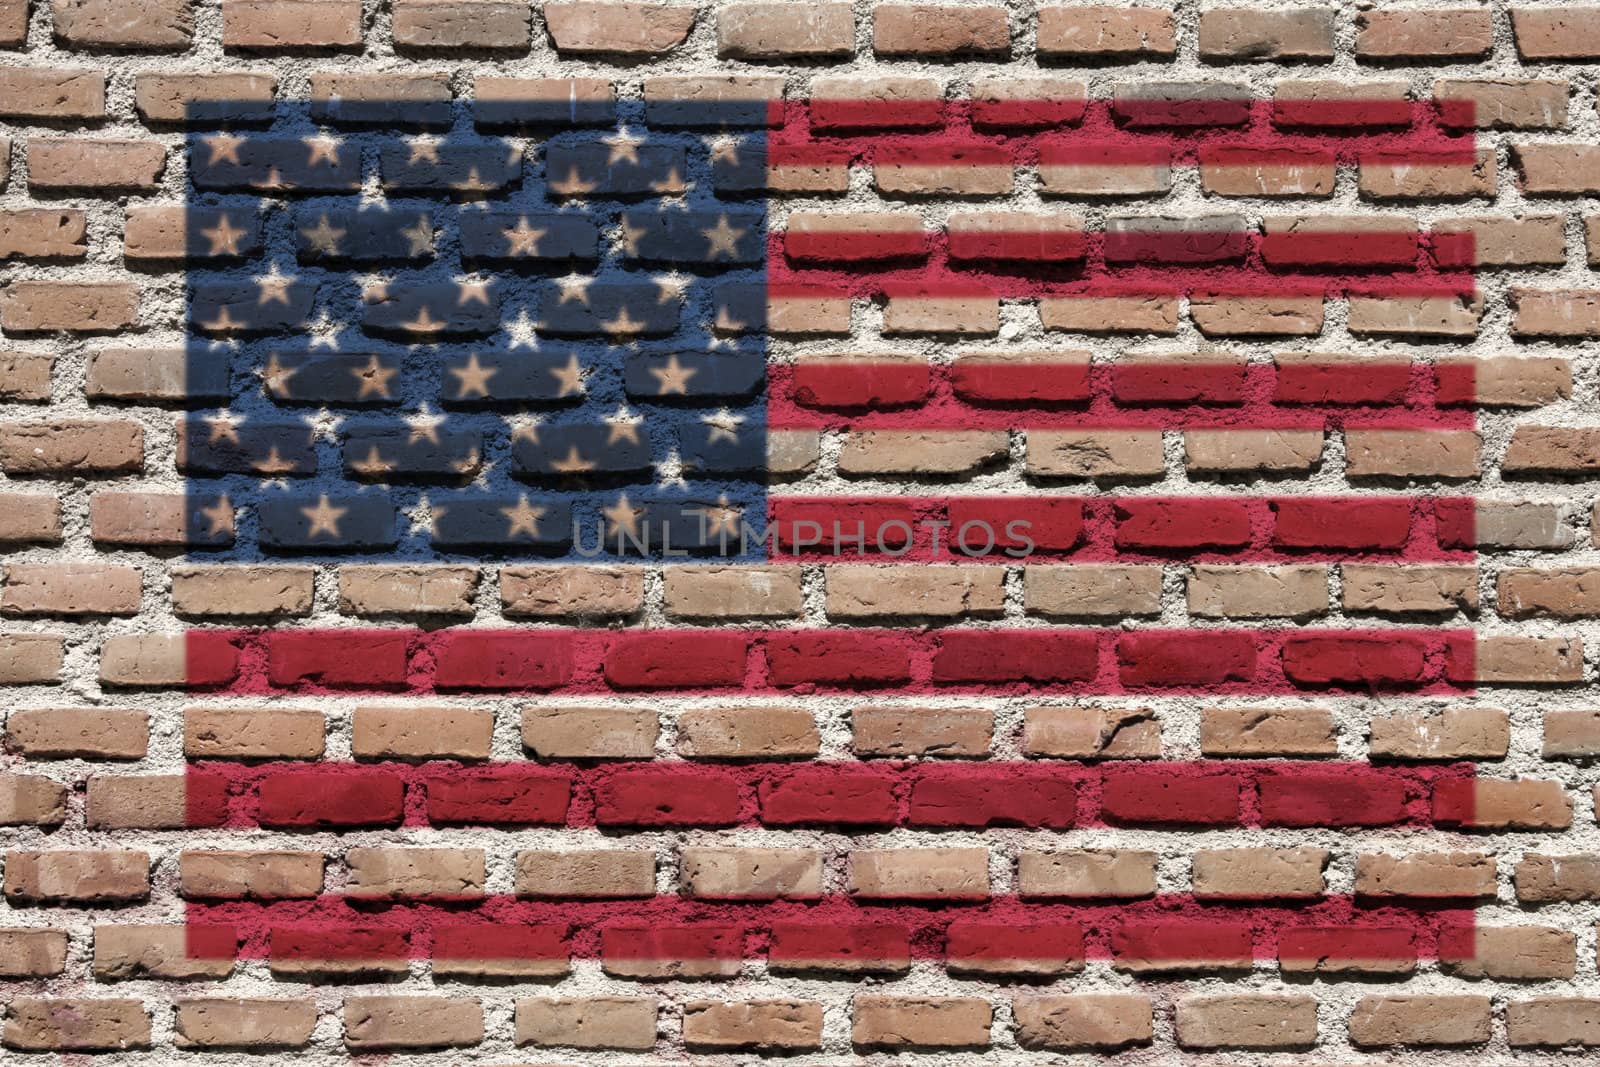 United States of America (USA) national flag spray painted on a brick wall. Grunge graffiti.